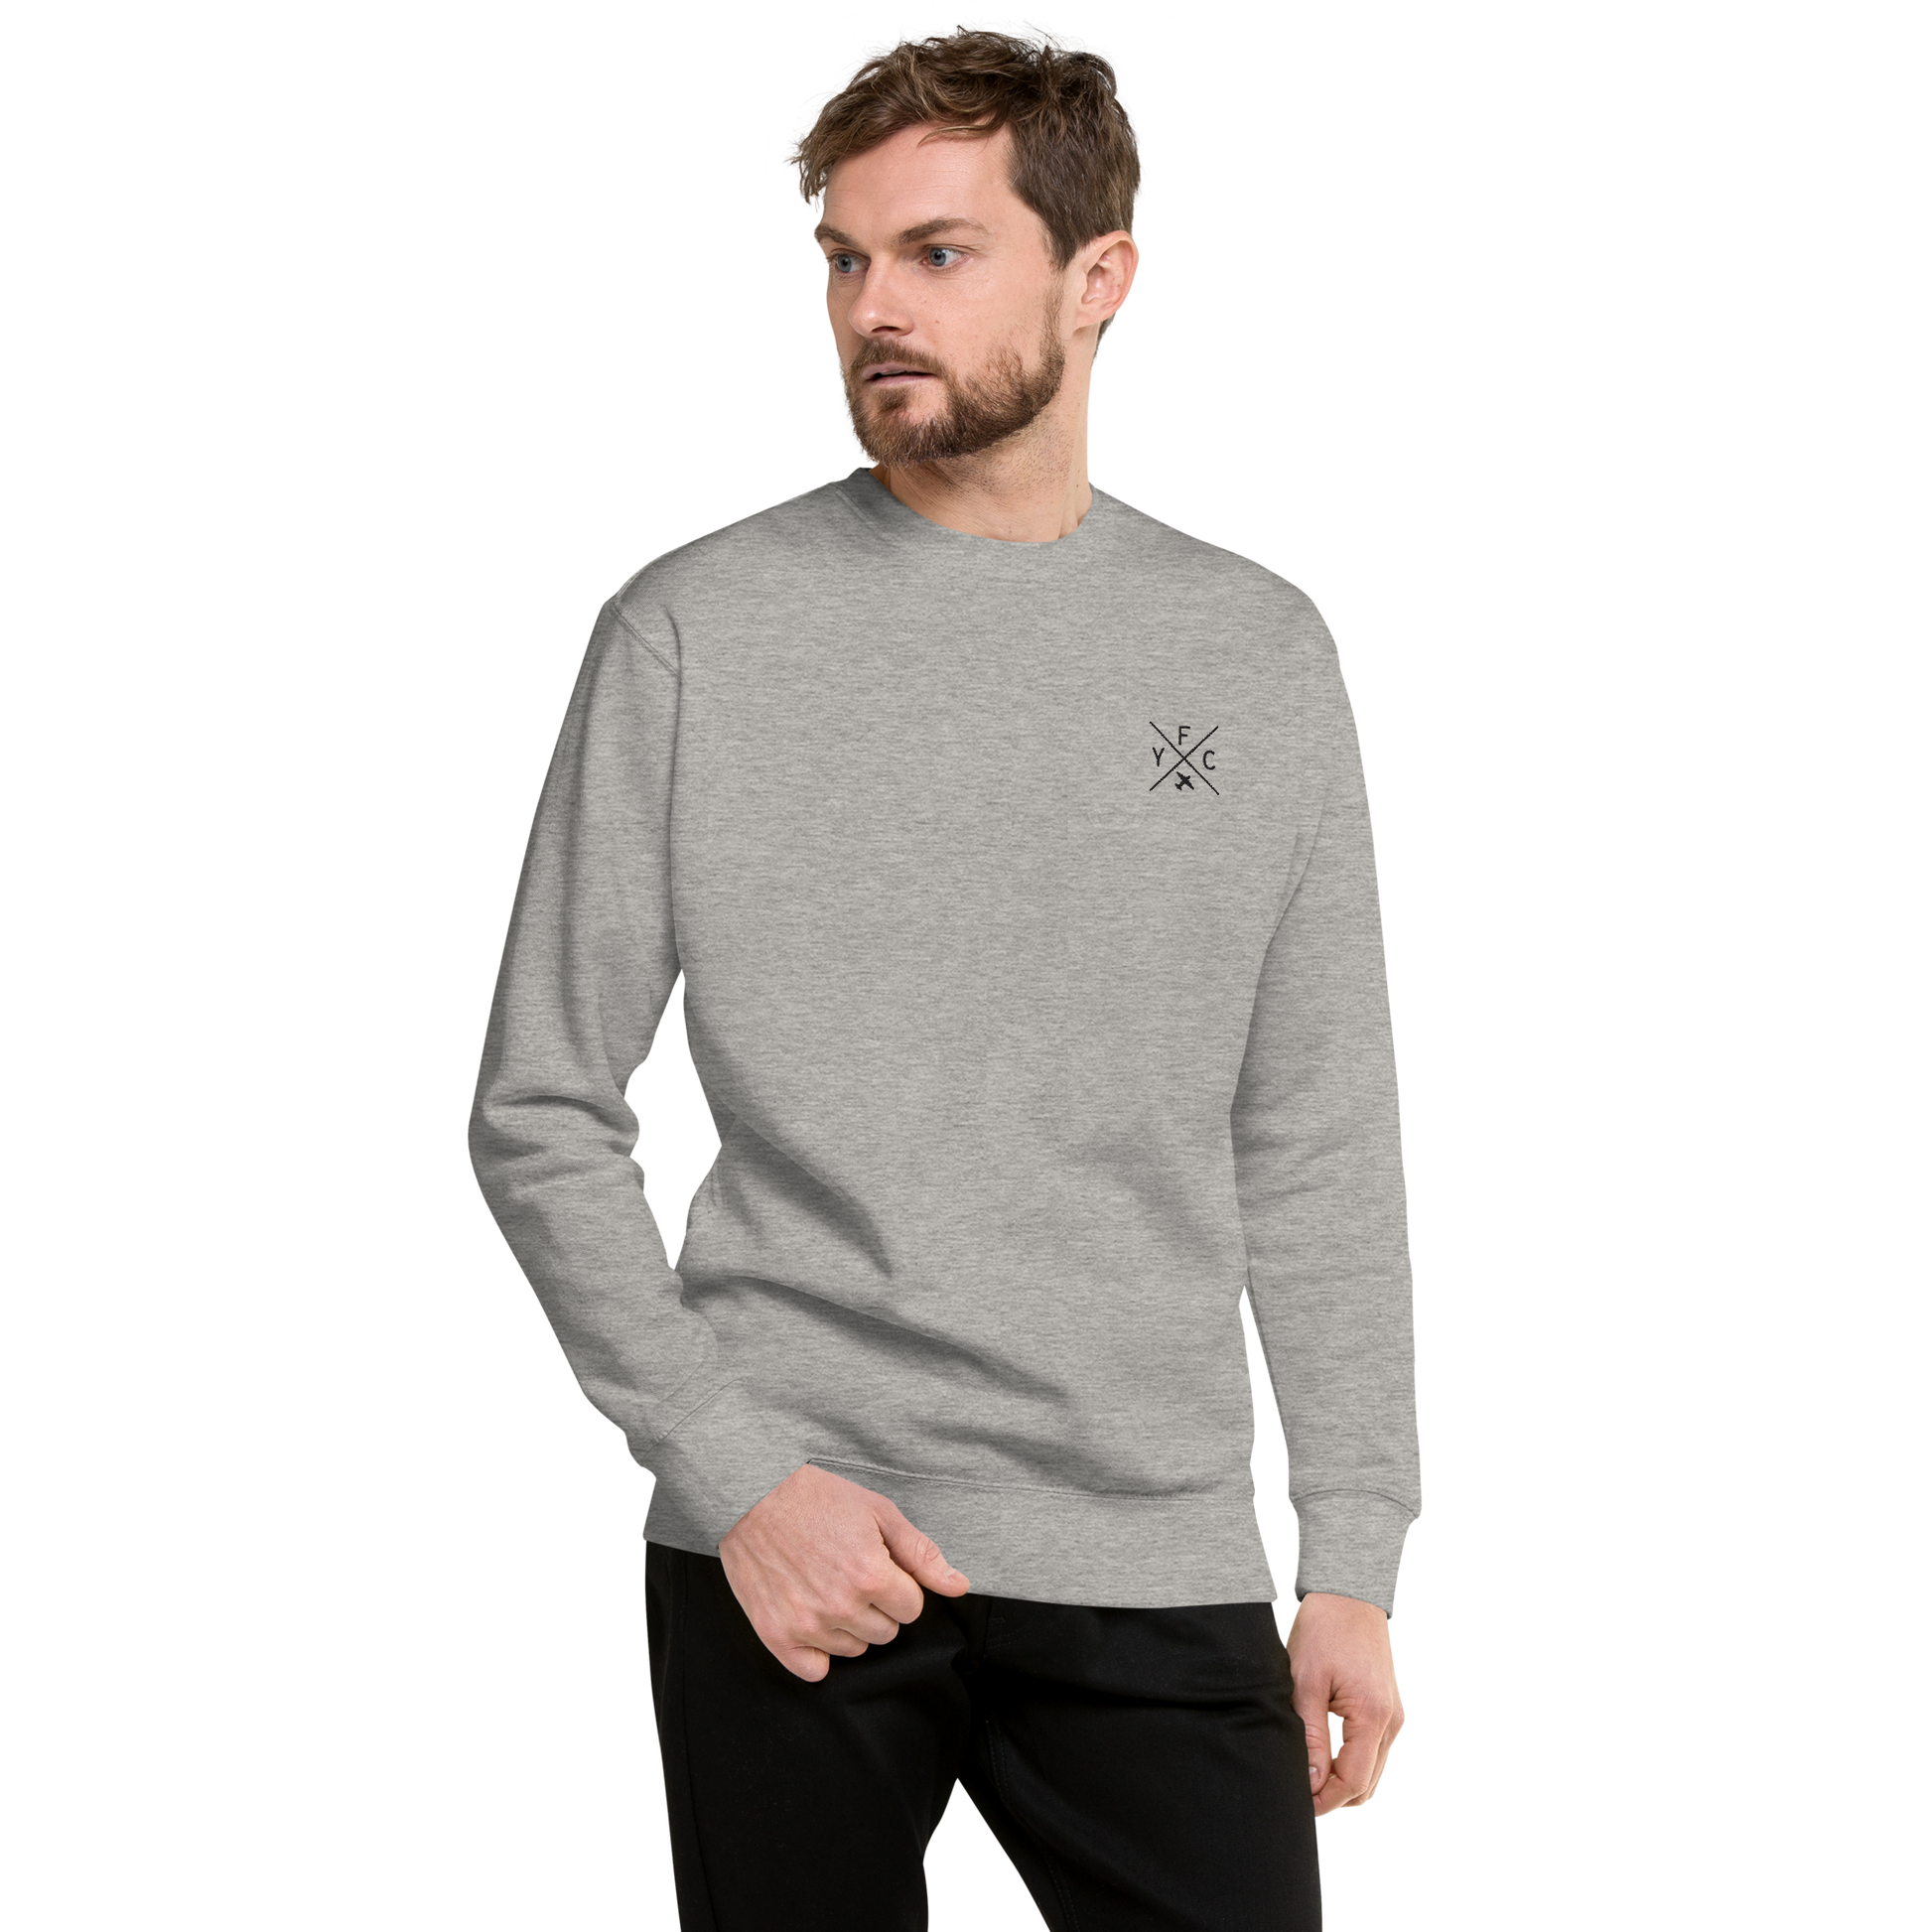 YHM Designs - YFC Fredericton Premium Sweatshirt - Crossed-X Design with Airport Code and Vintage Propliner - Black Embroidery - Image 01